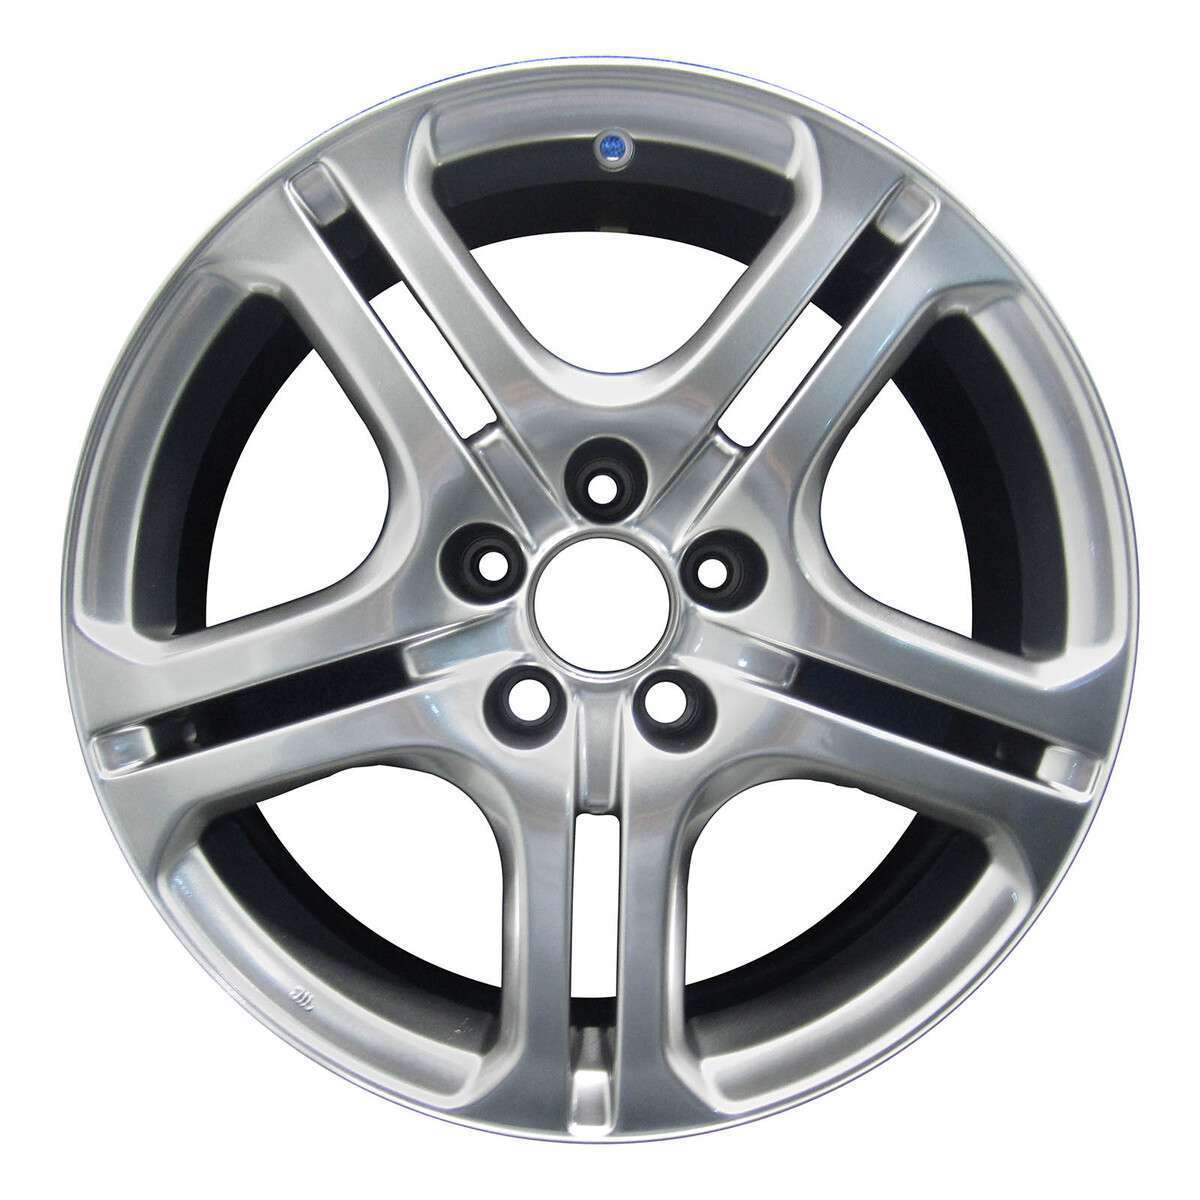 2008 Acura TSX 18" OEM Wheel Rim W71735H